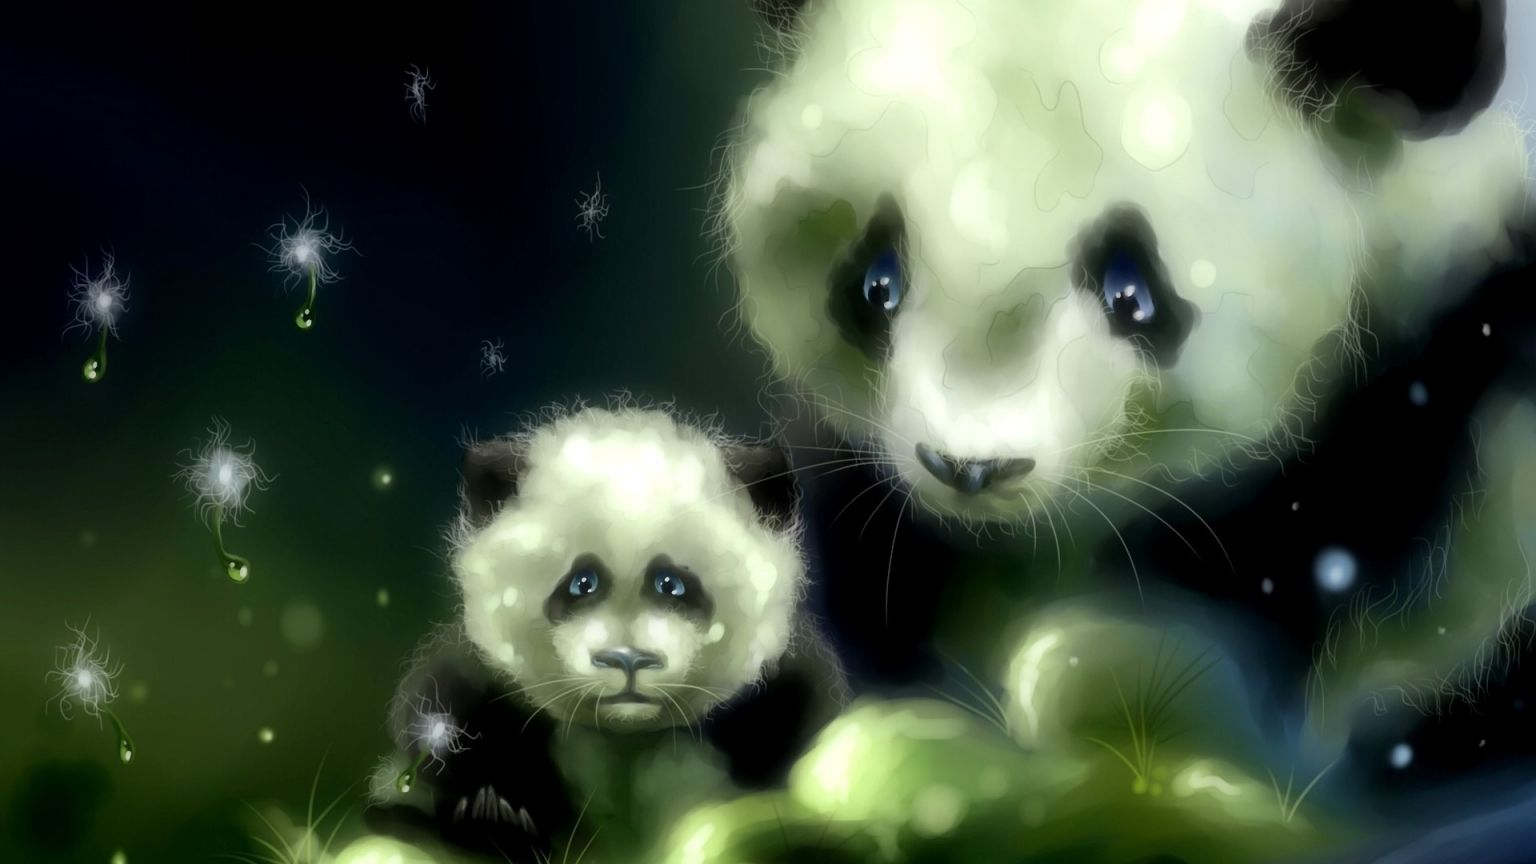 Free download Art panda bears babies cute wallpaper 1920x1200 39807 [1920x1200] for your Desktop, Mobile & Tablet. Explore Cute Baby Panda Wallpaper. Panda Bear Wallpaper, Baby Pandas Wallpaper, Kawaii Panda Wallpaper